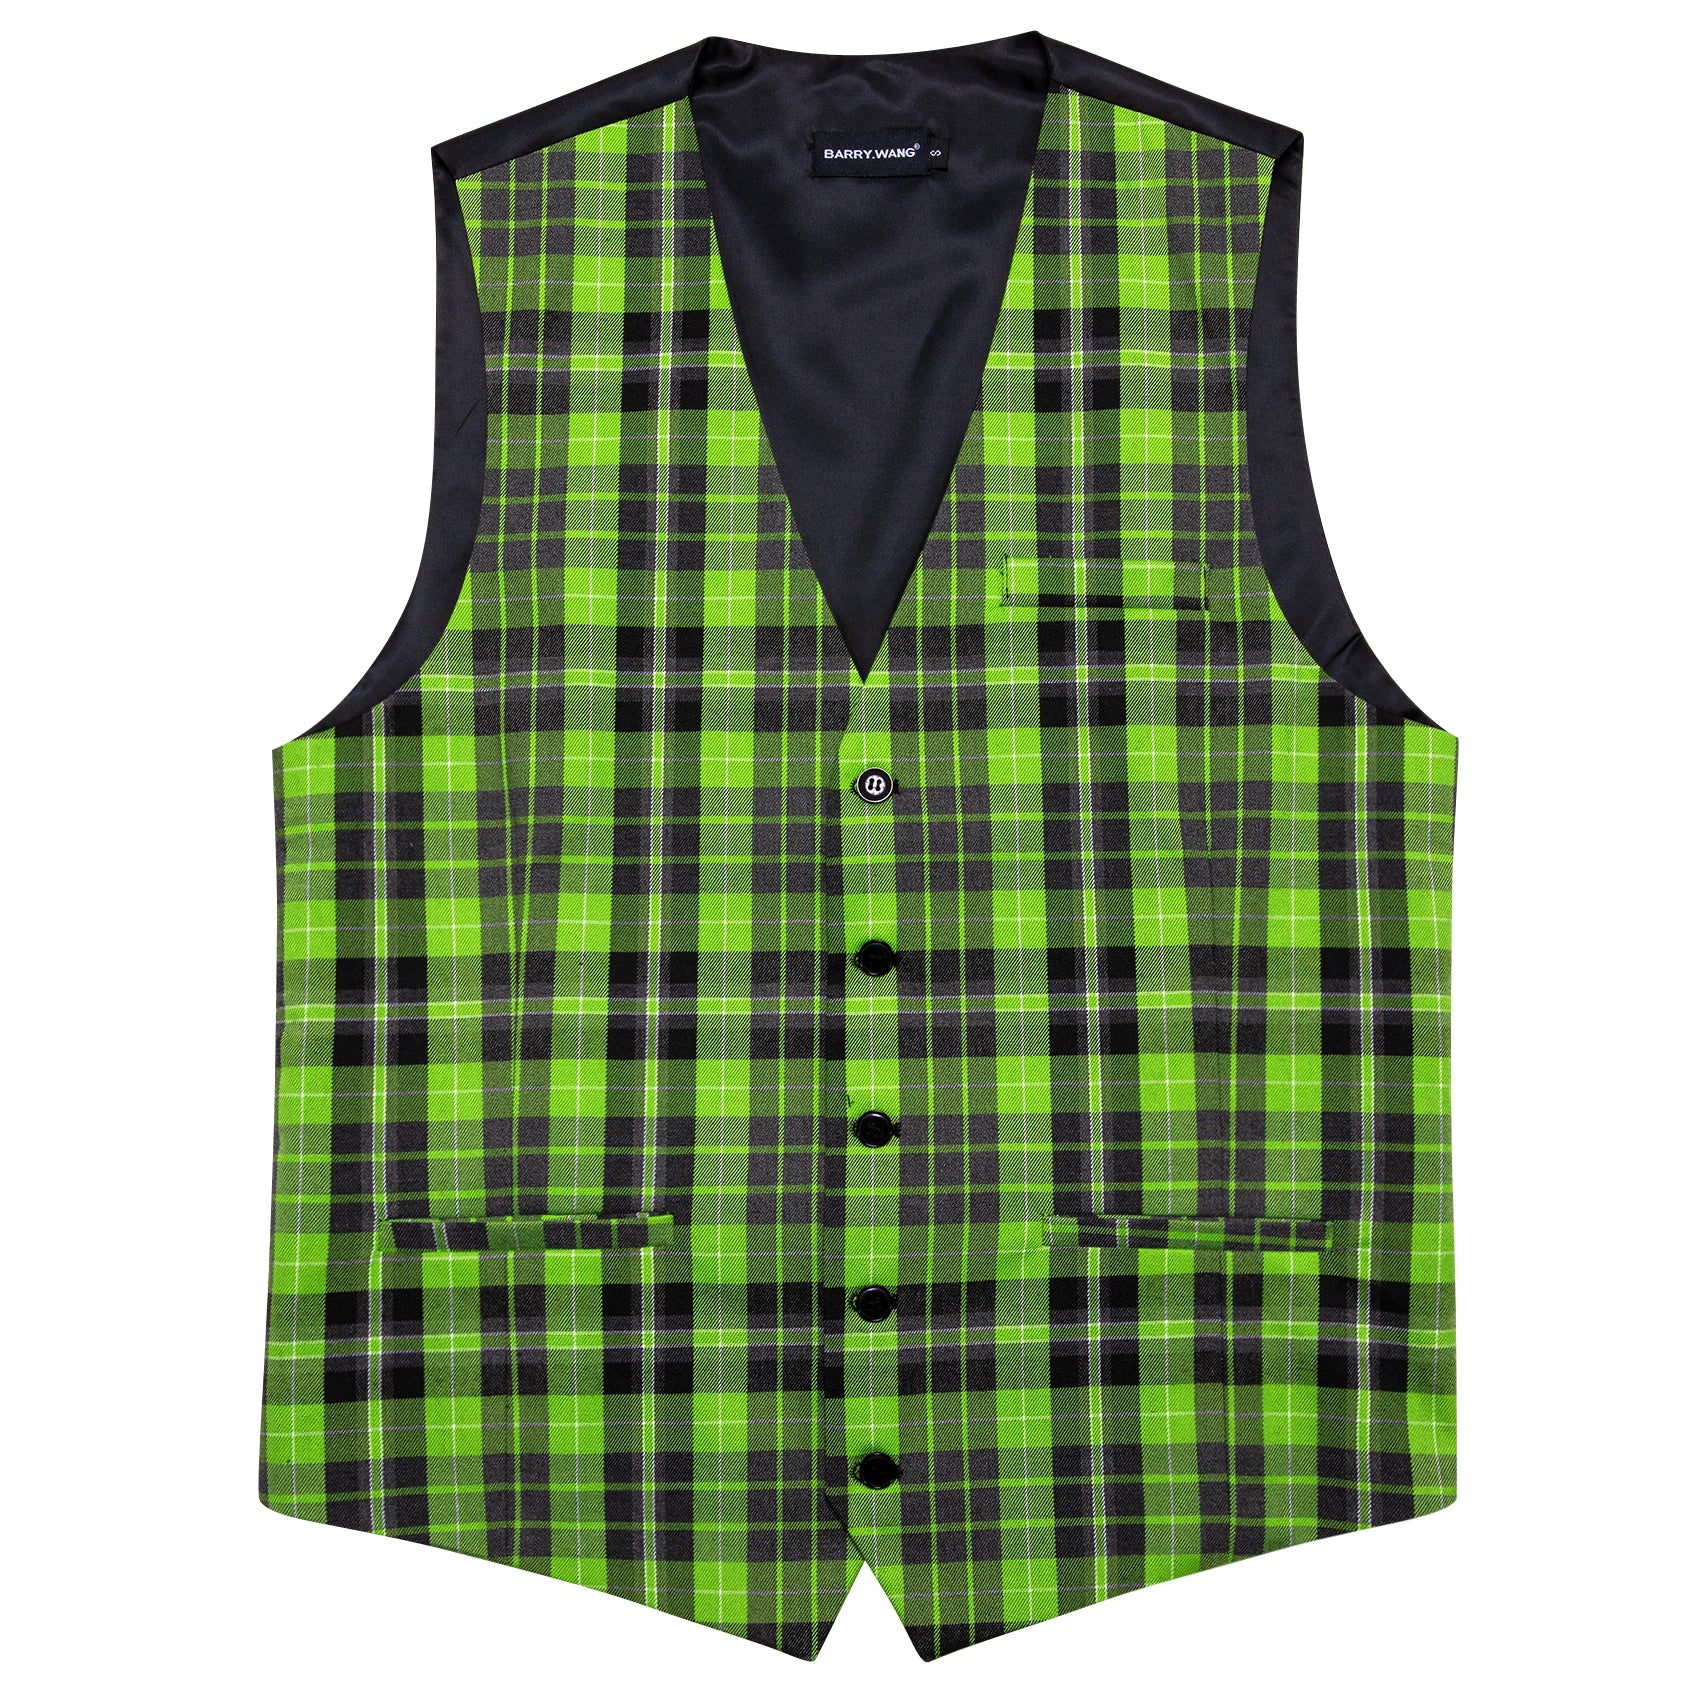 Barry.wang Light Green Black Plaid Waistcoat Vest